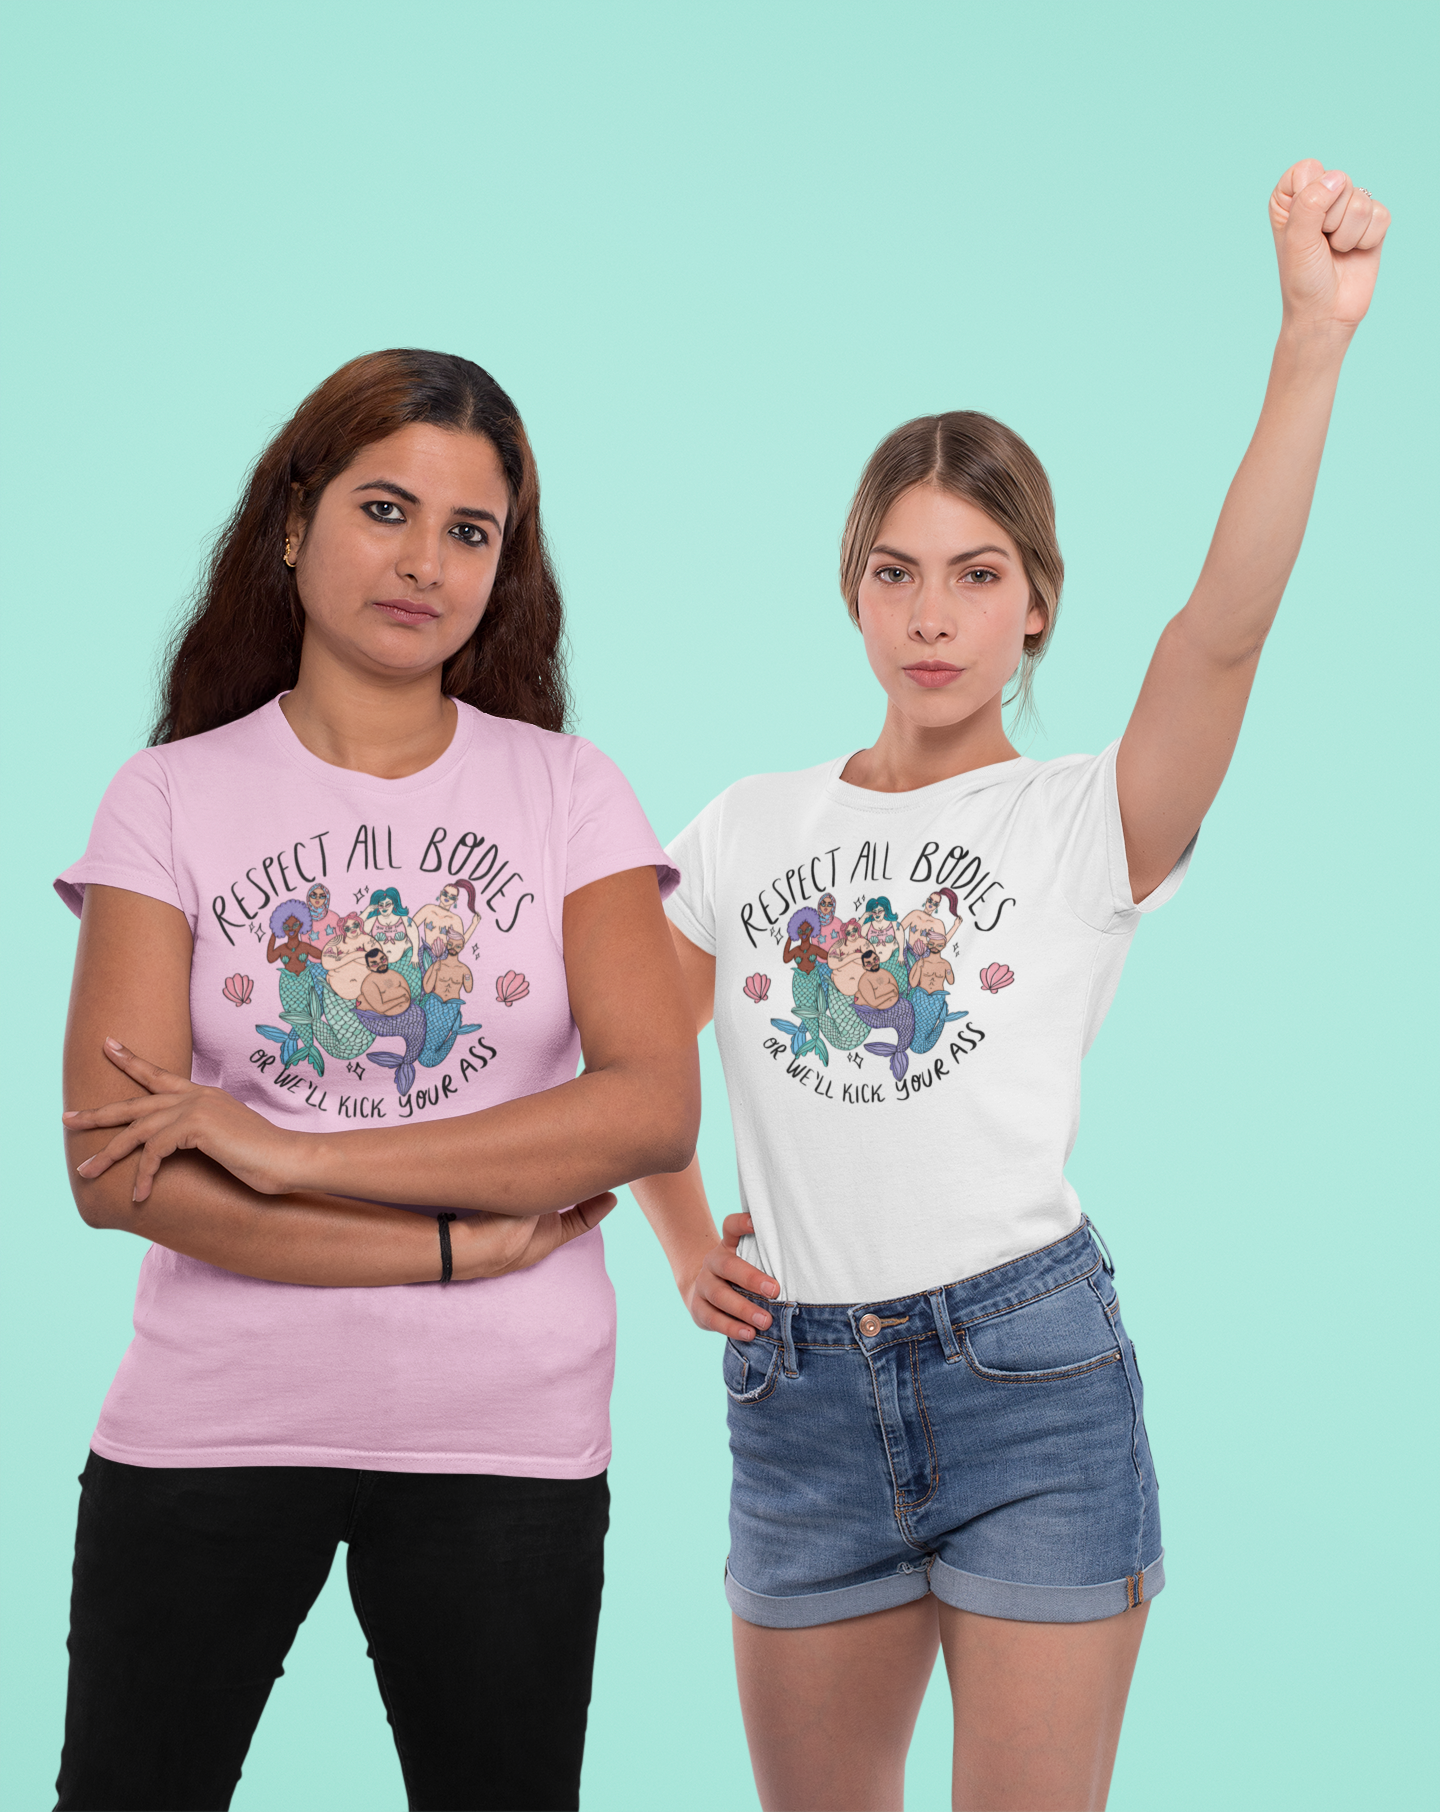 Body Positive Mermaids - Organic unisex t-shirt